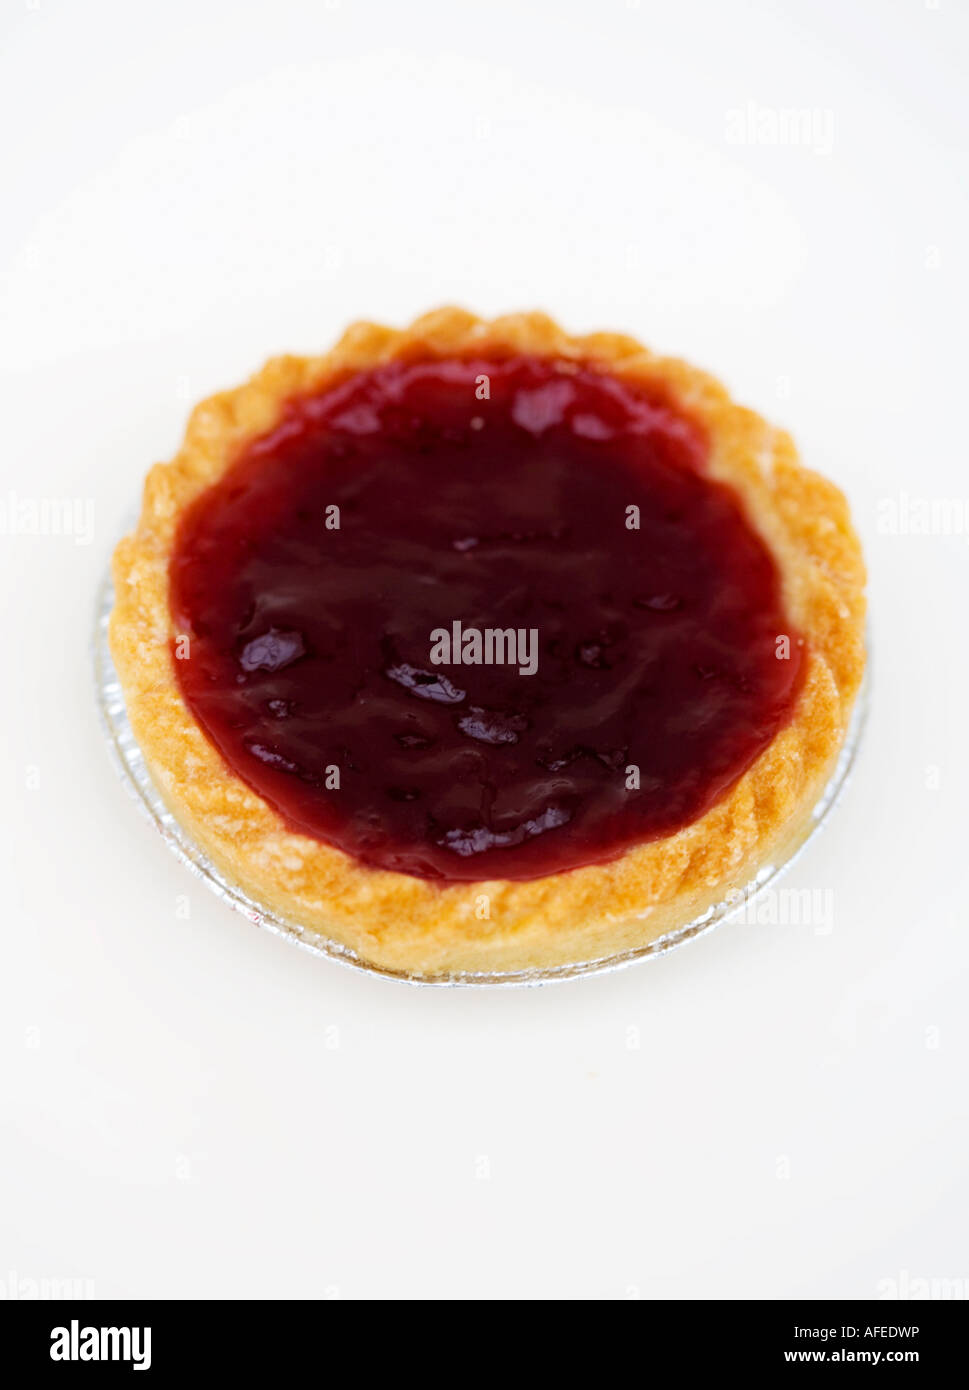 One jam tart against a white background Stock Photo